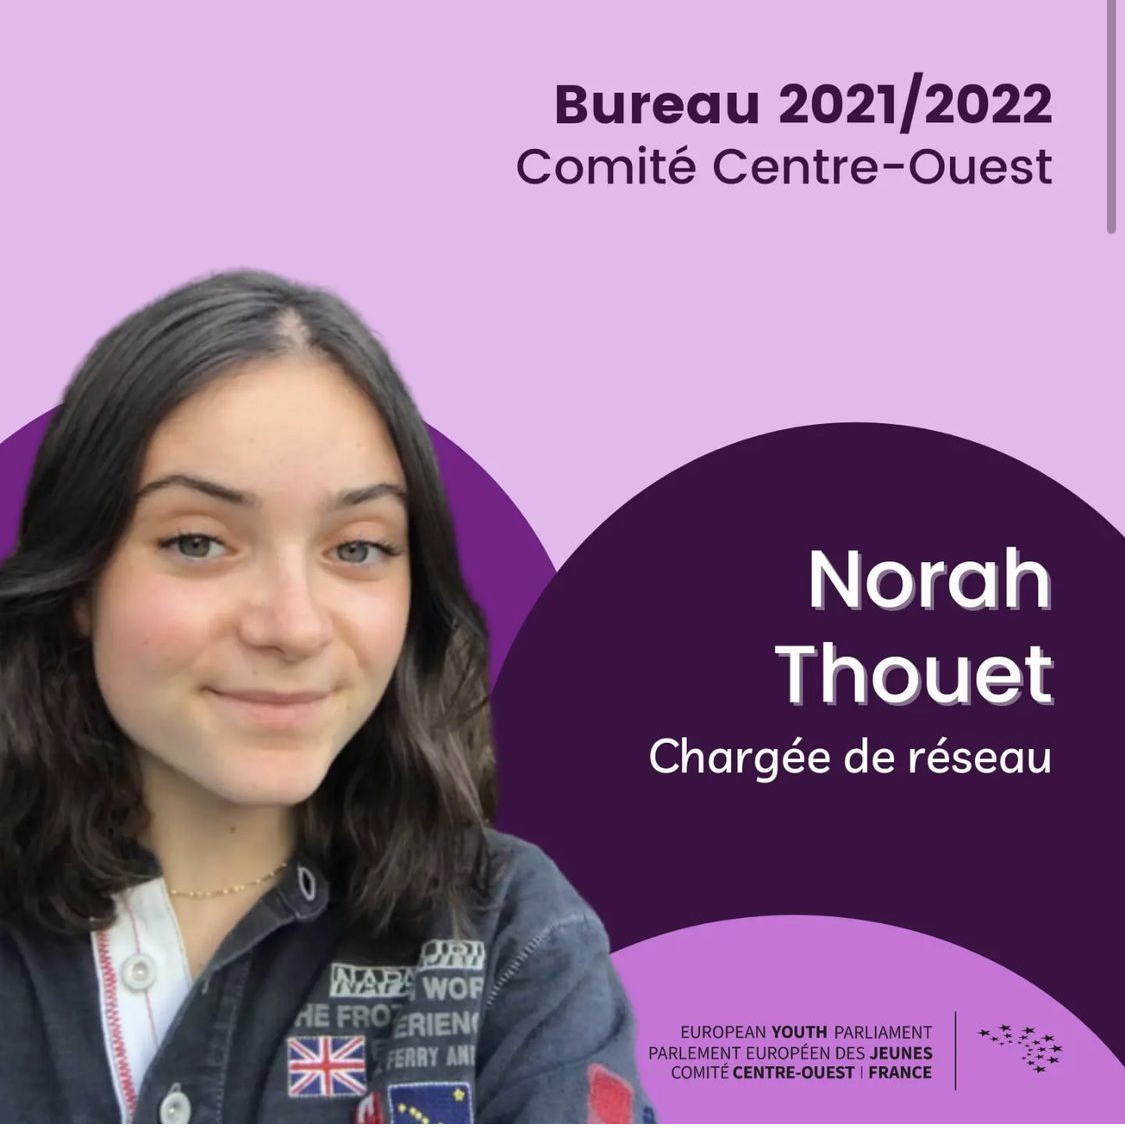 Norah Thouet